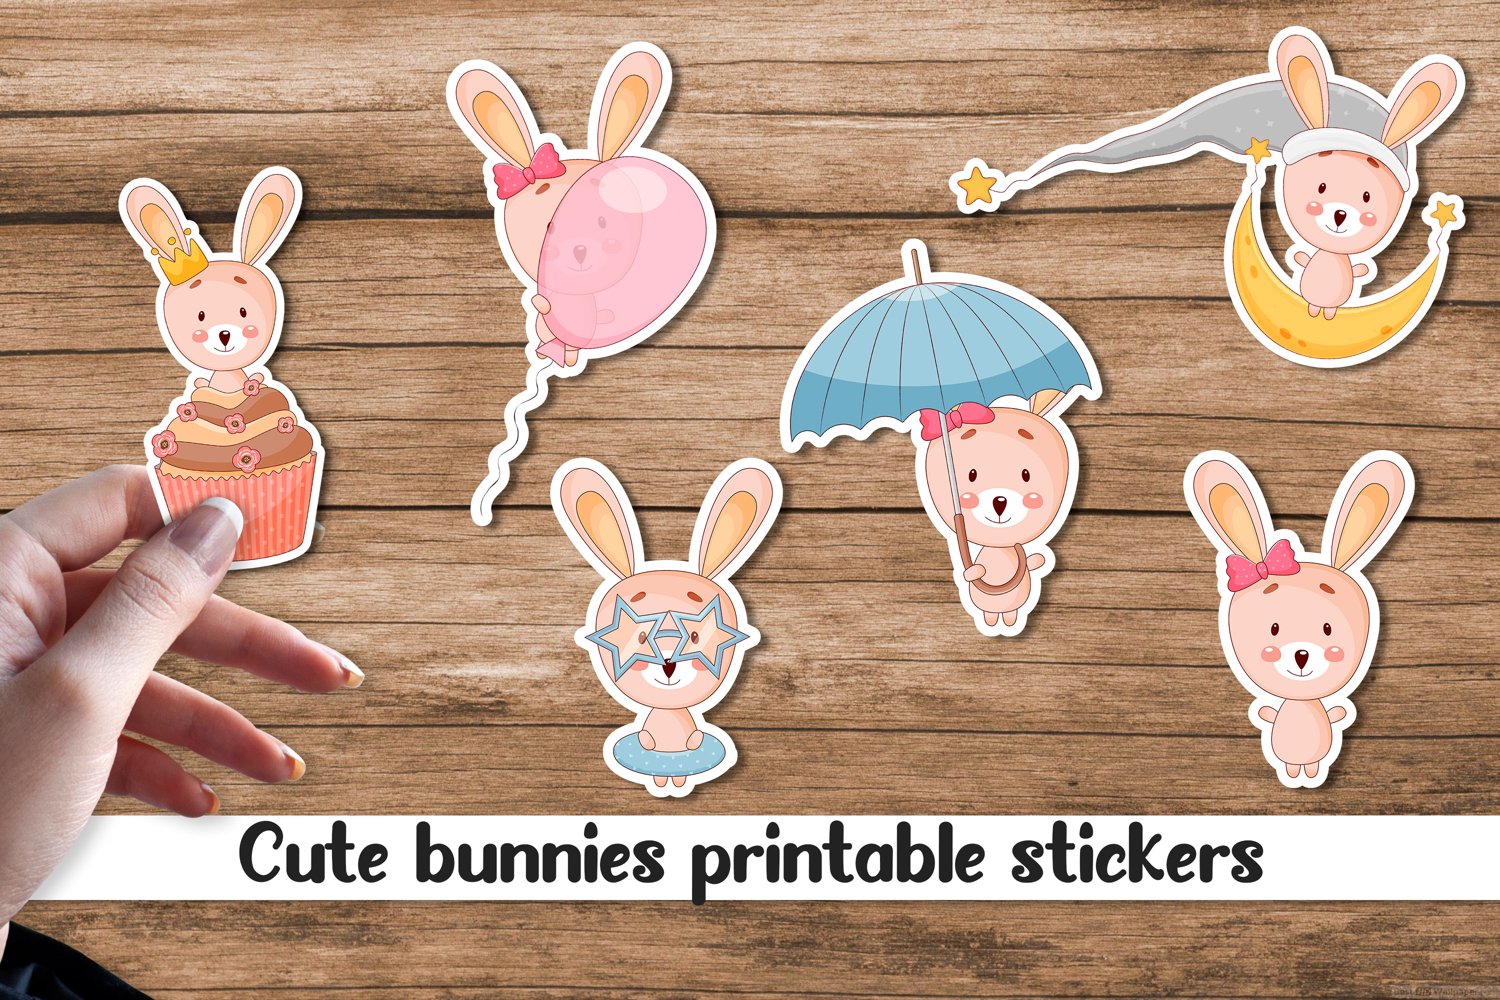 Cute bunnies printable stickers.